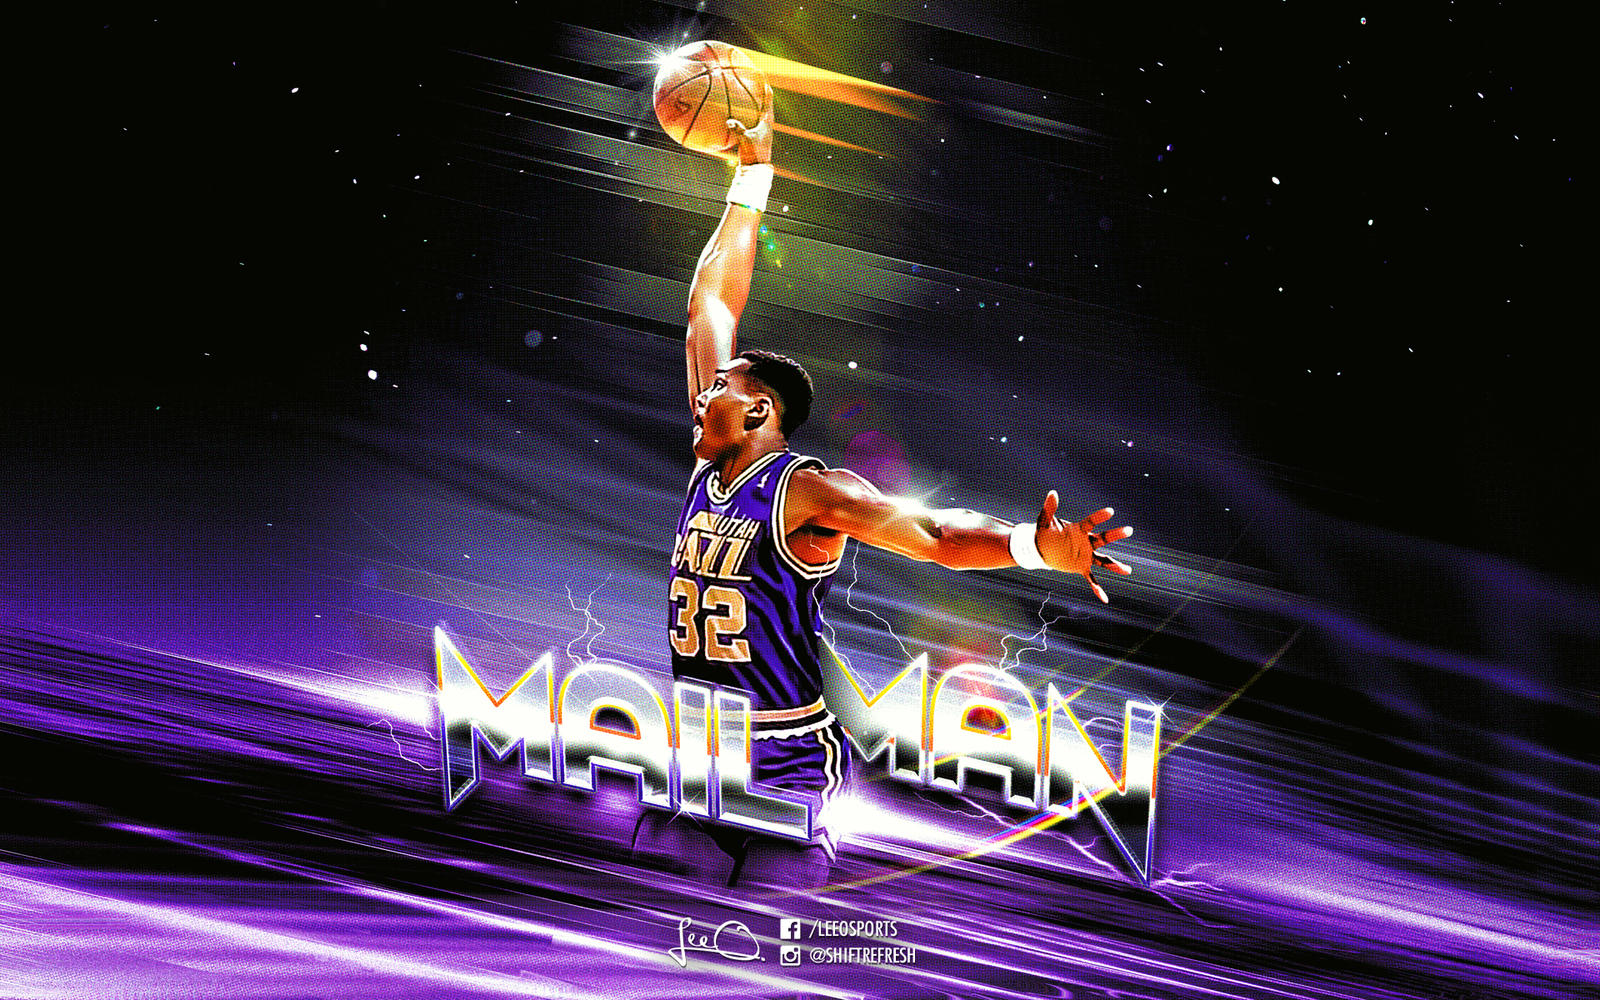 Karl Malone Mailmain NBA wallpaper by skythlee on DeviantArt